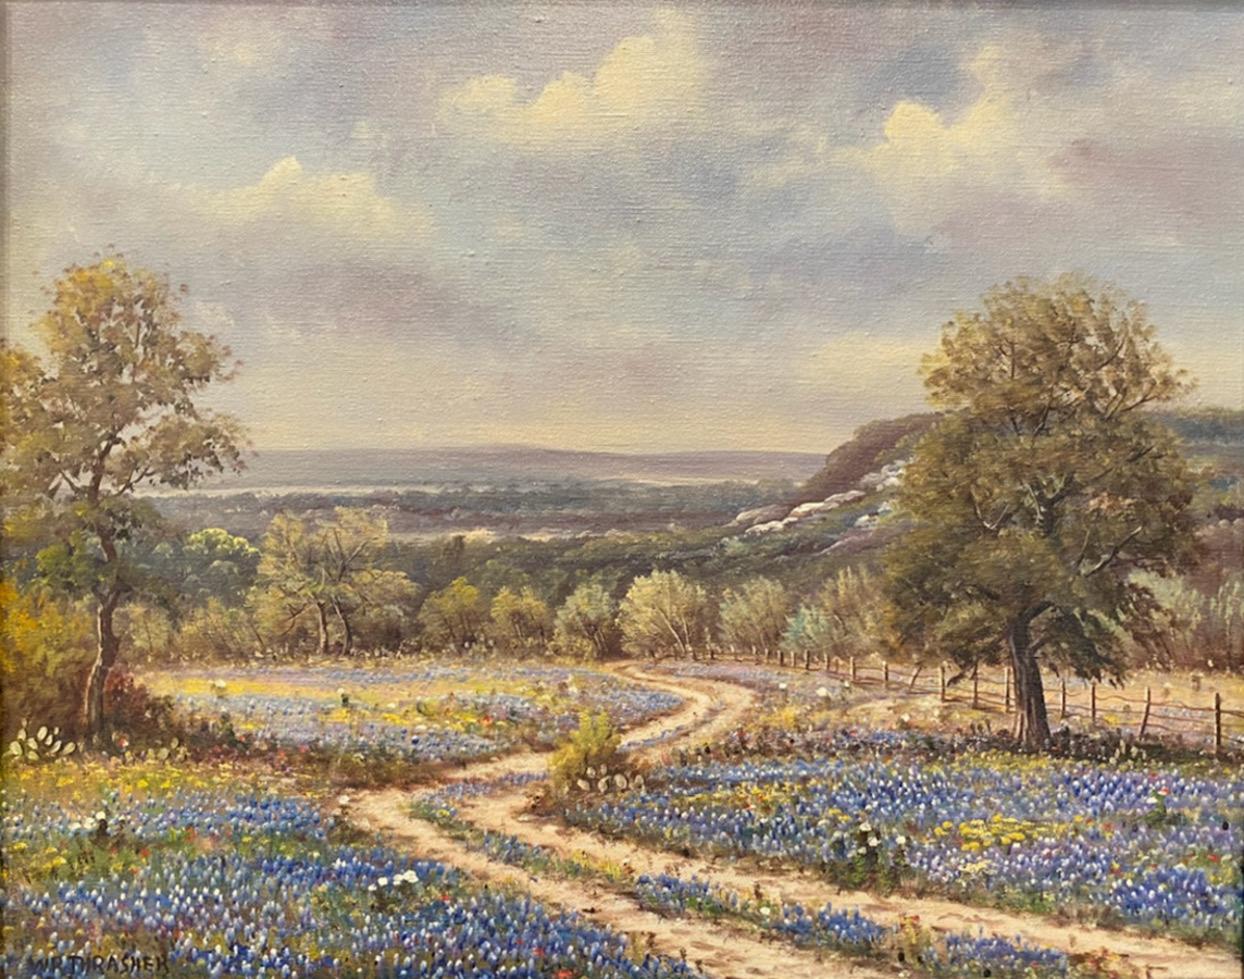 W.R. Thrasher Landscape Painting - "BLUEBONNET FENCE LINE" IMAGE SIZE 16 X 20 TEXAS HILL COUNTRY LANDSCAPE